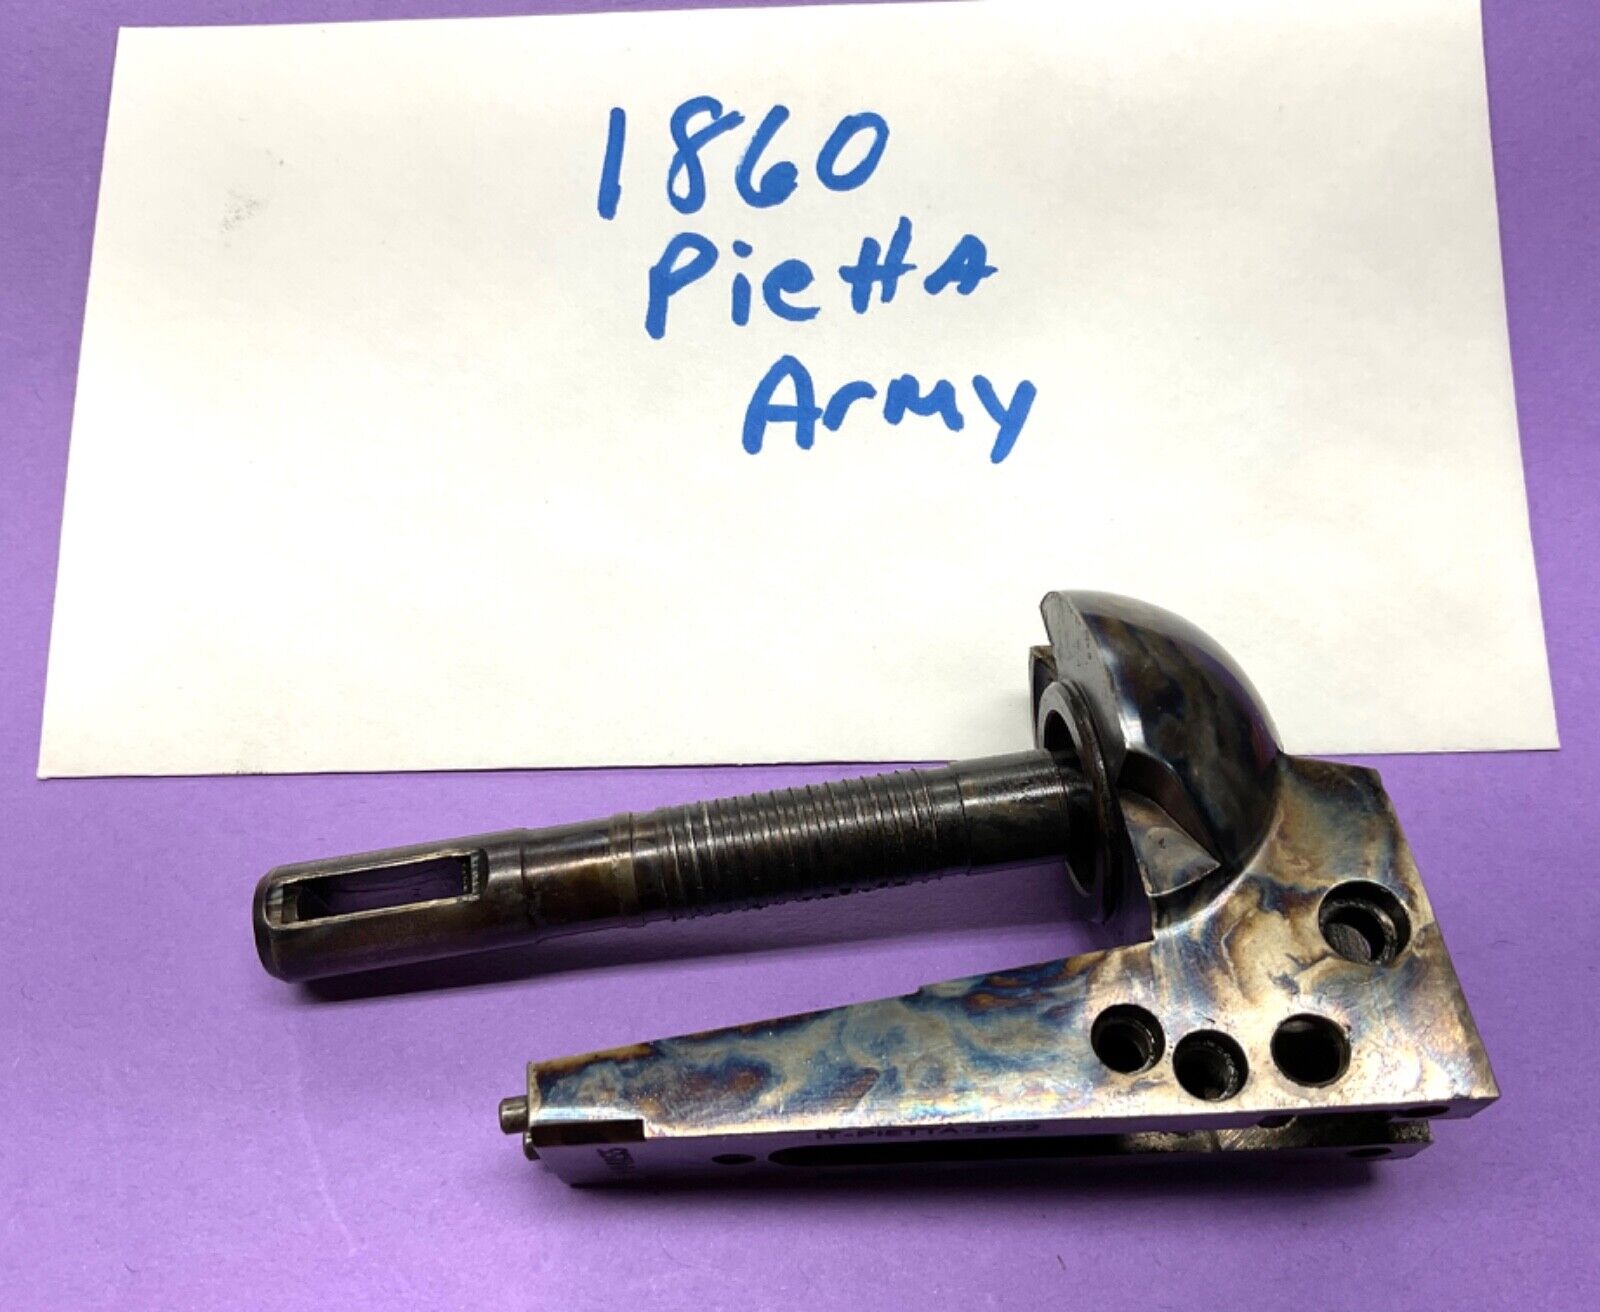 New Pietta  1860  ARMY Case Hardened - .44  Caliber 4 Screw Arbor Mount Part